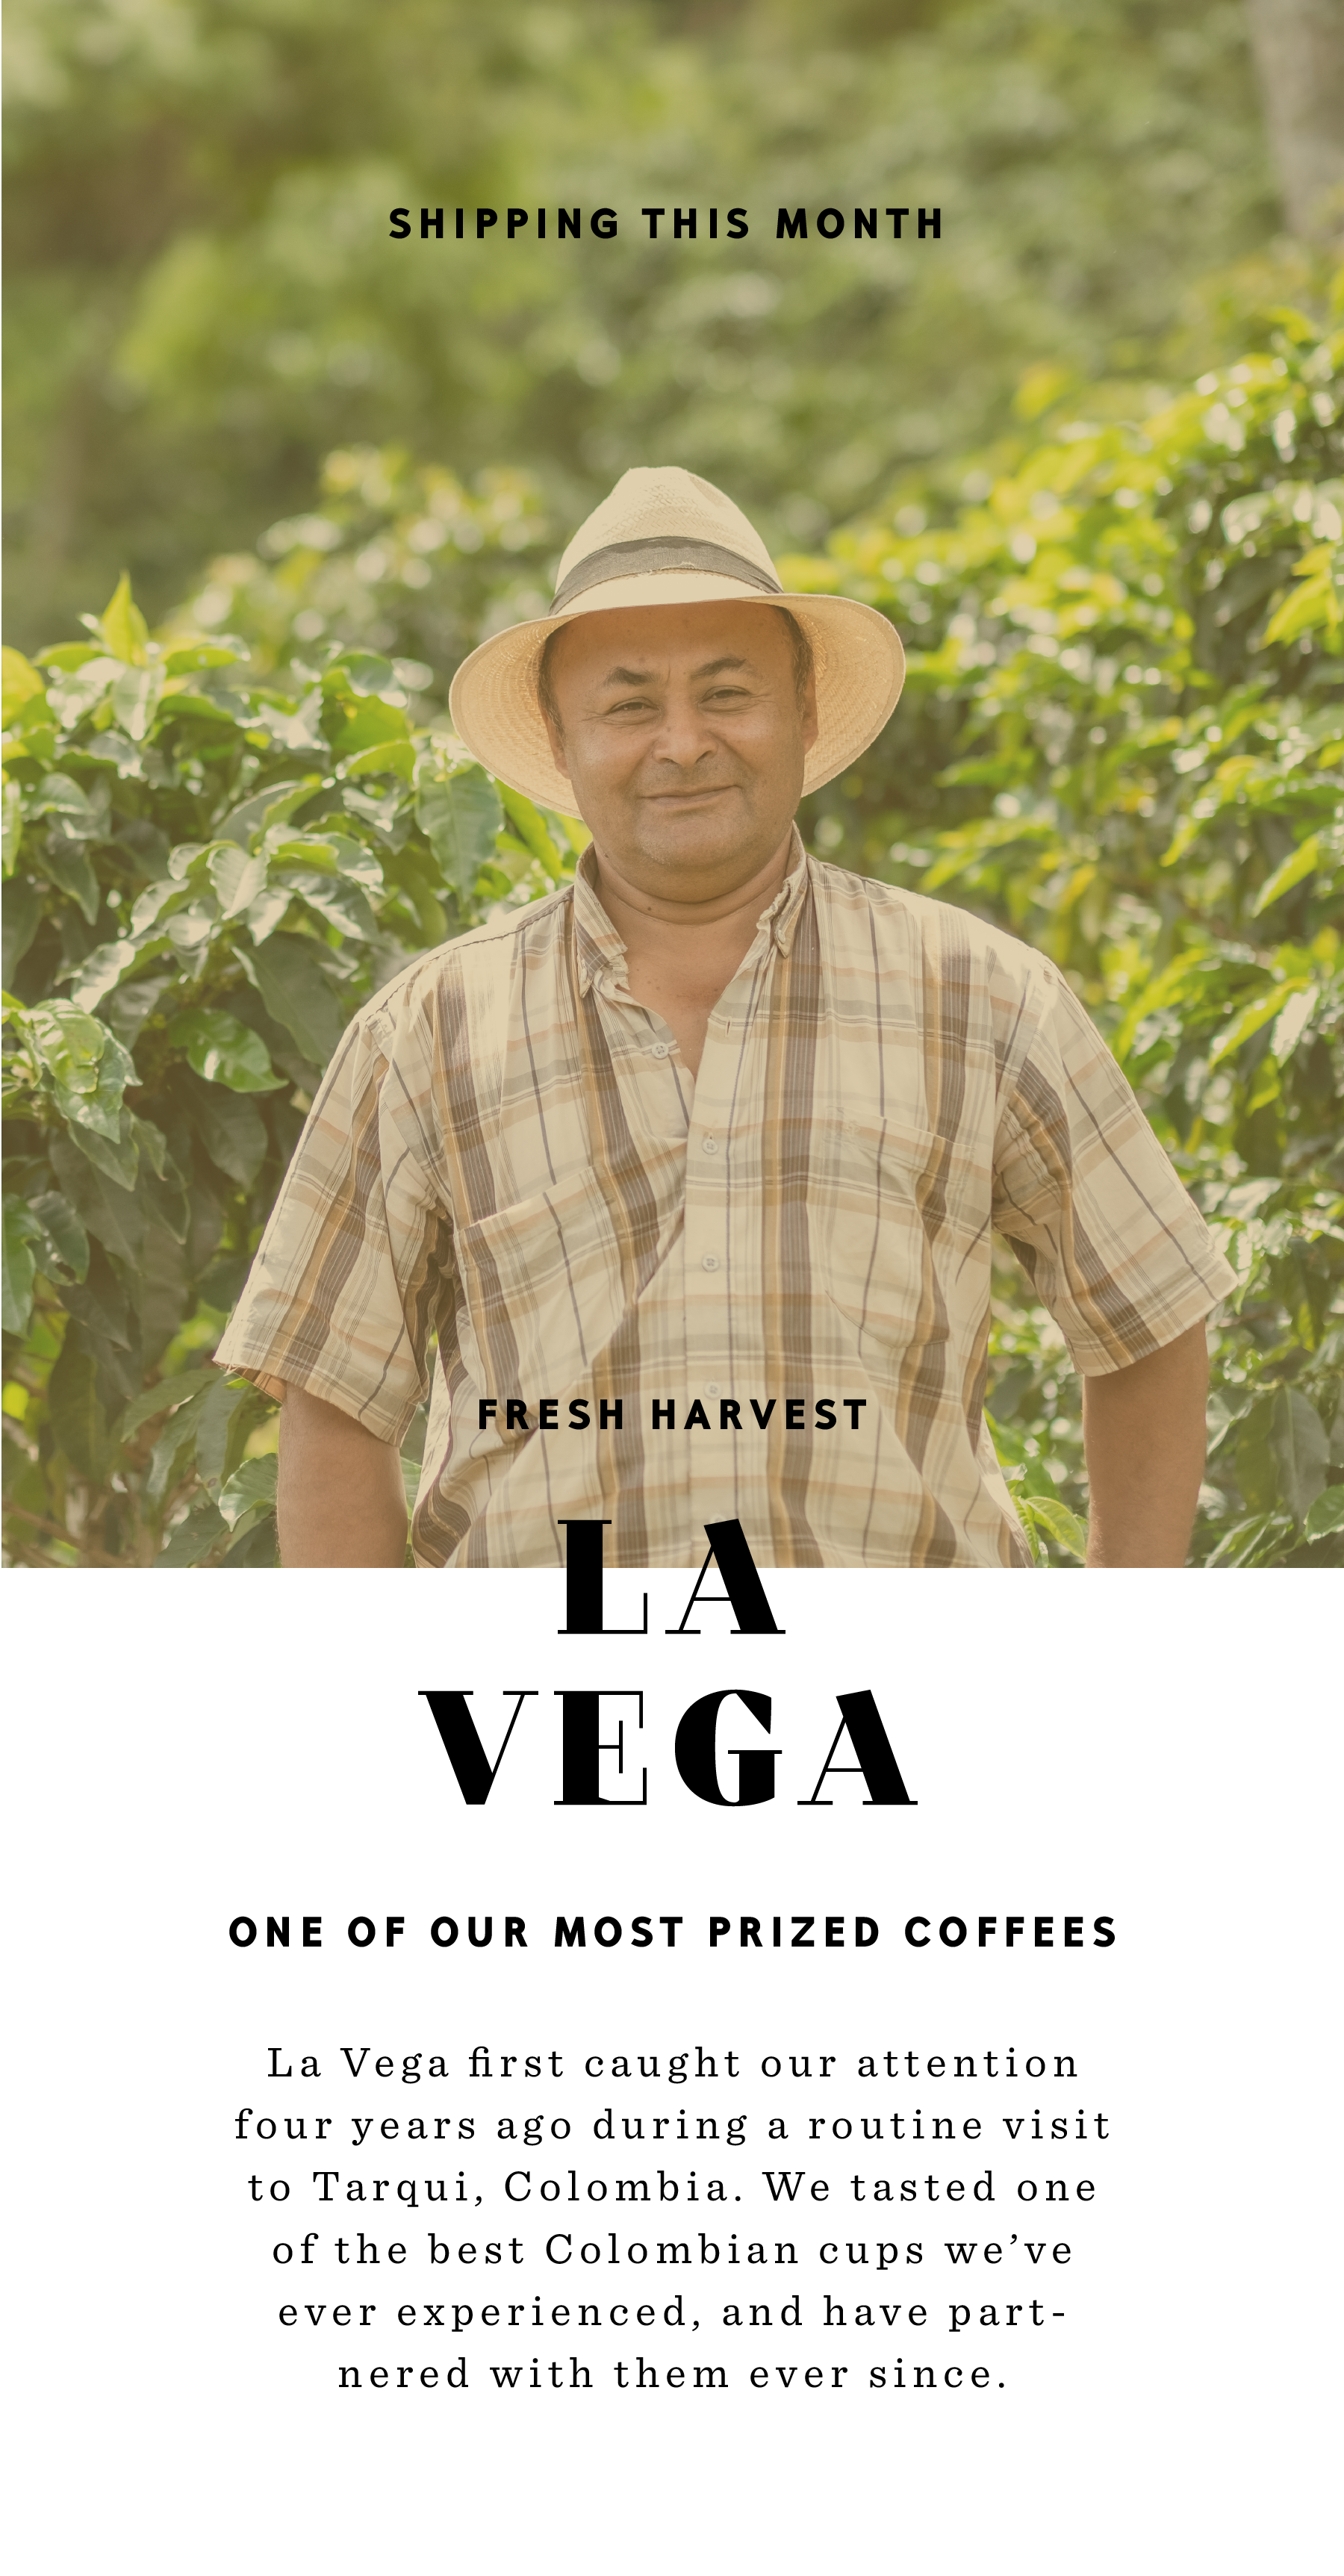 La Vega, Colombian coffee